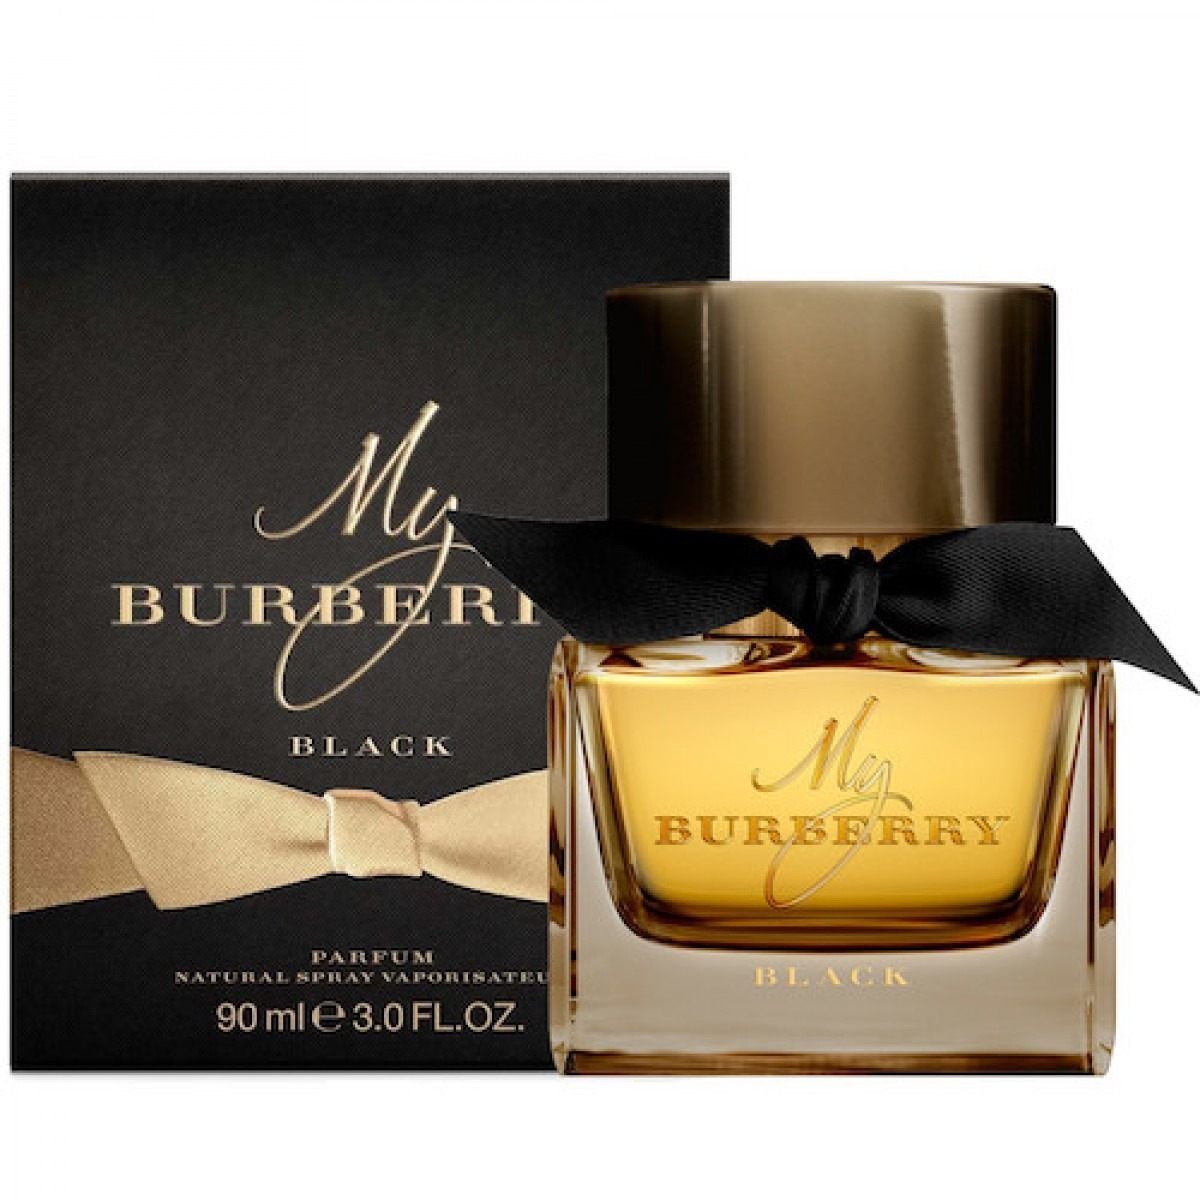 BURBERRY MY BURBERRY BLACK PARFUM 90ML FOR WOMEN - Perfume Bangladesh